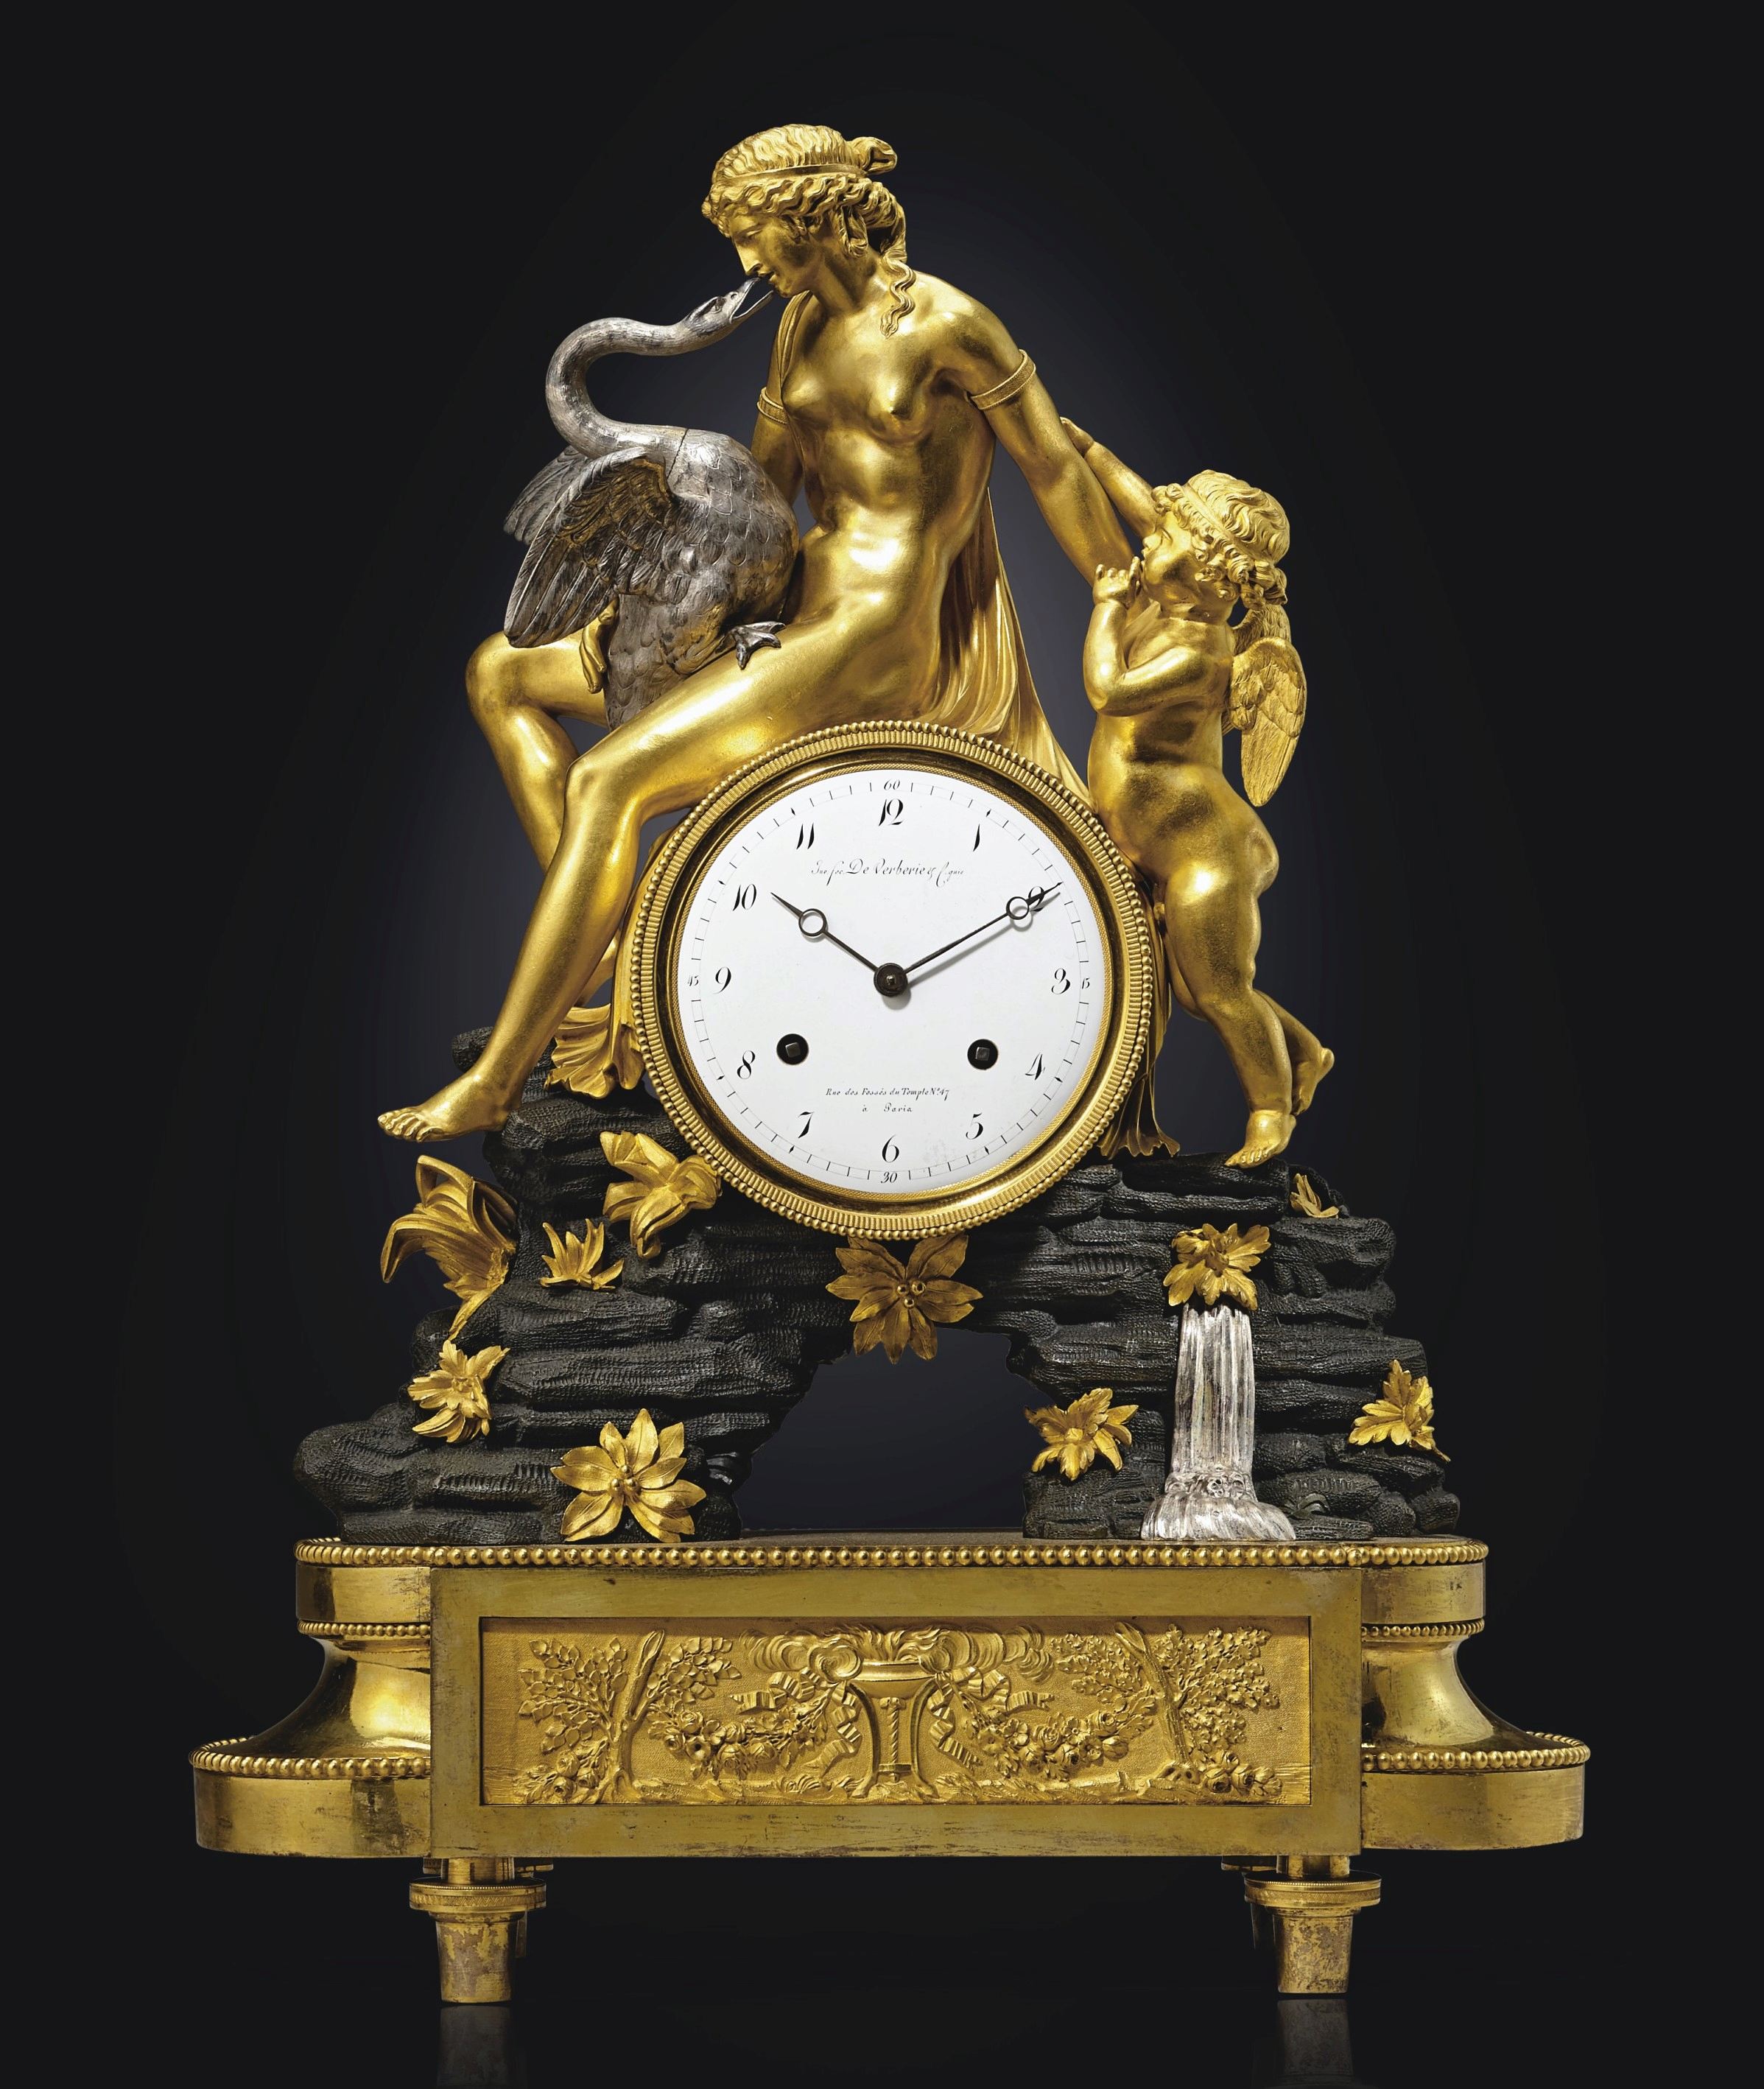 Horloges et pendules du XVIIIe siècle - Page 2 2020_n53